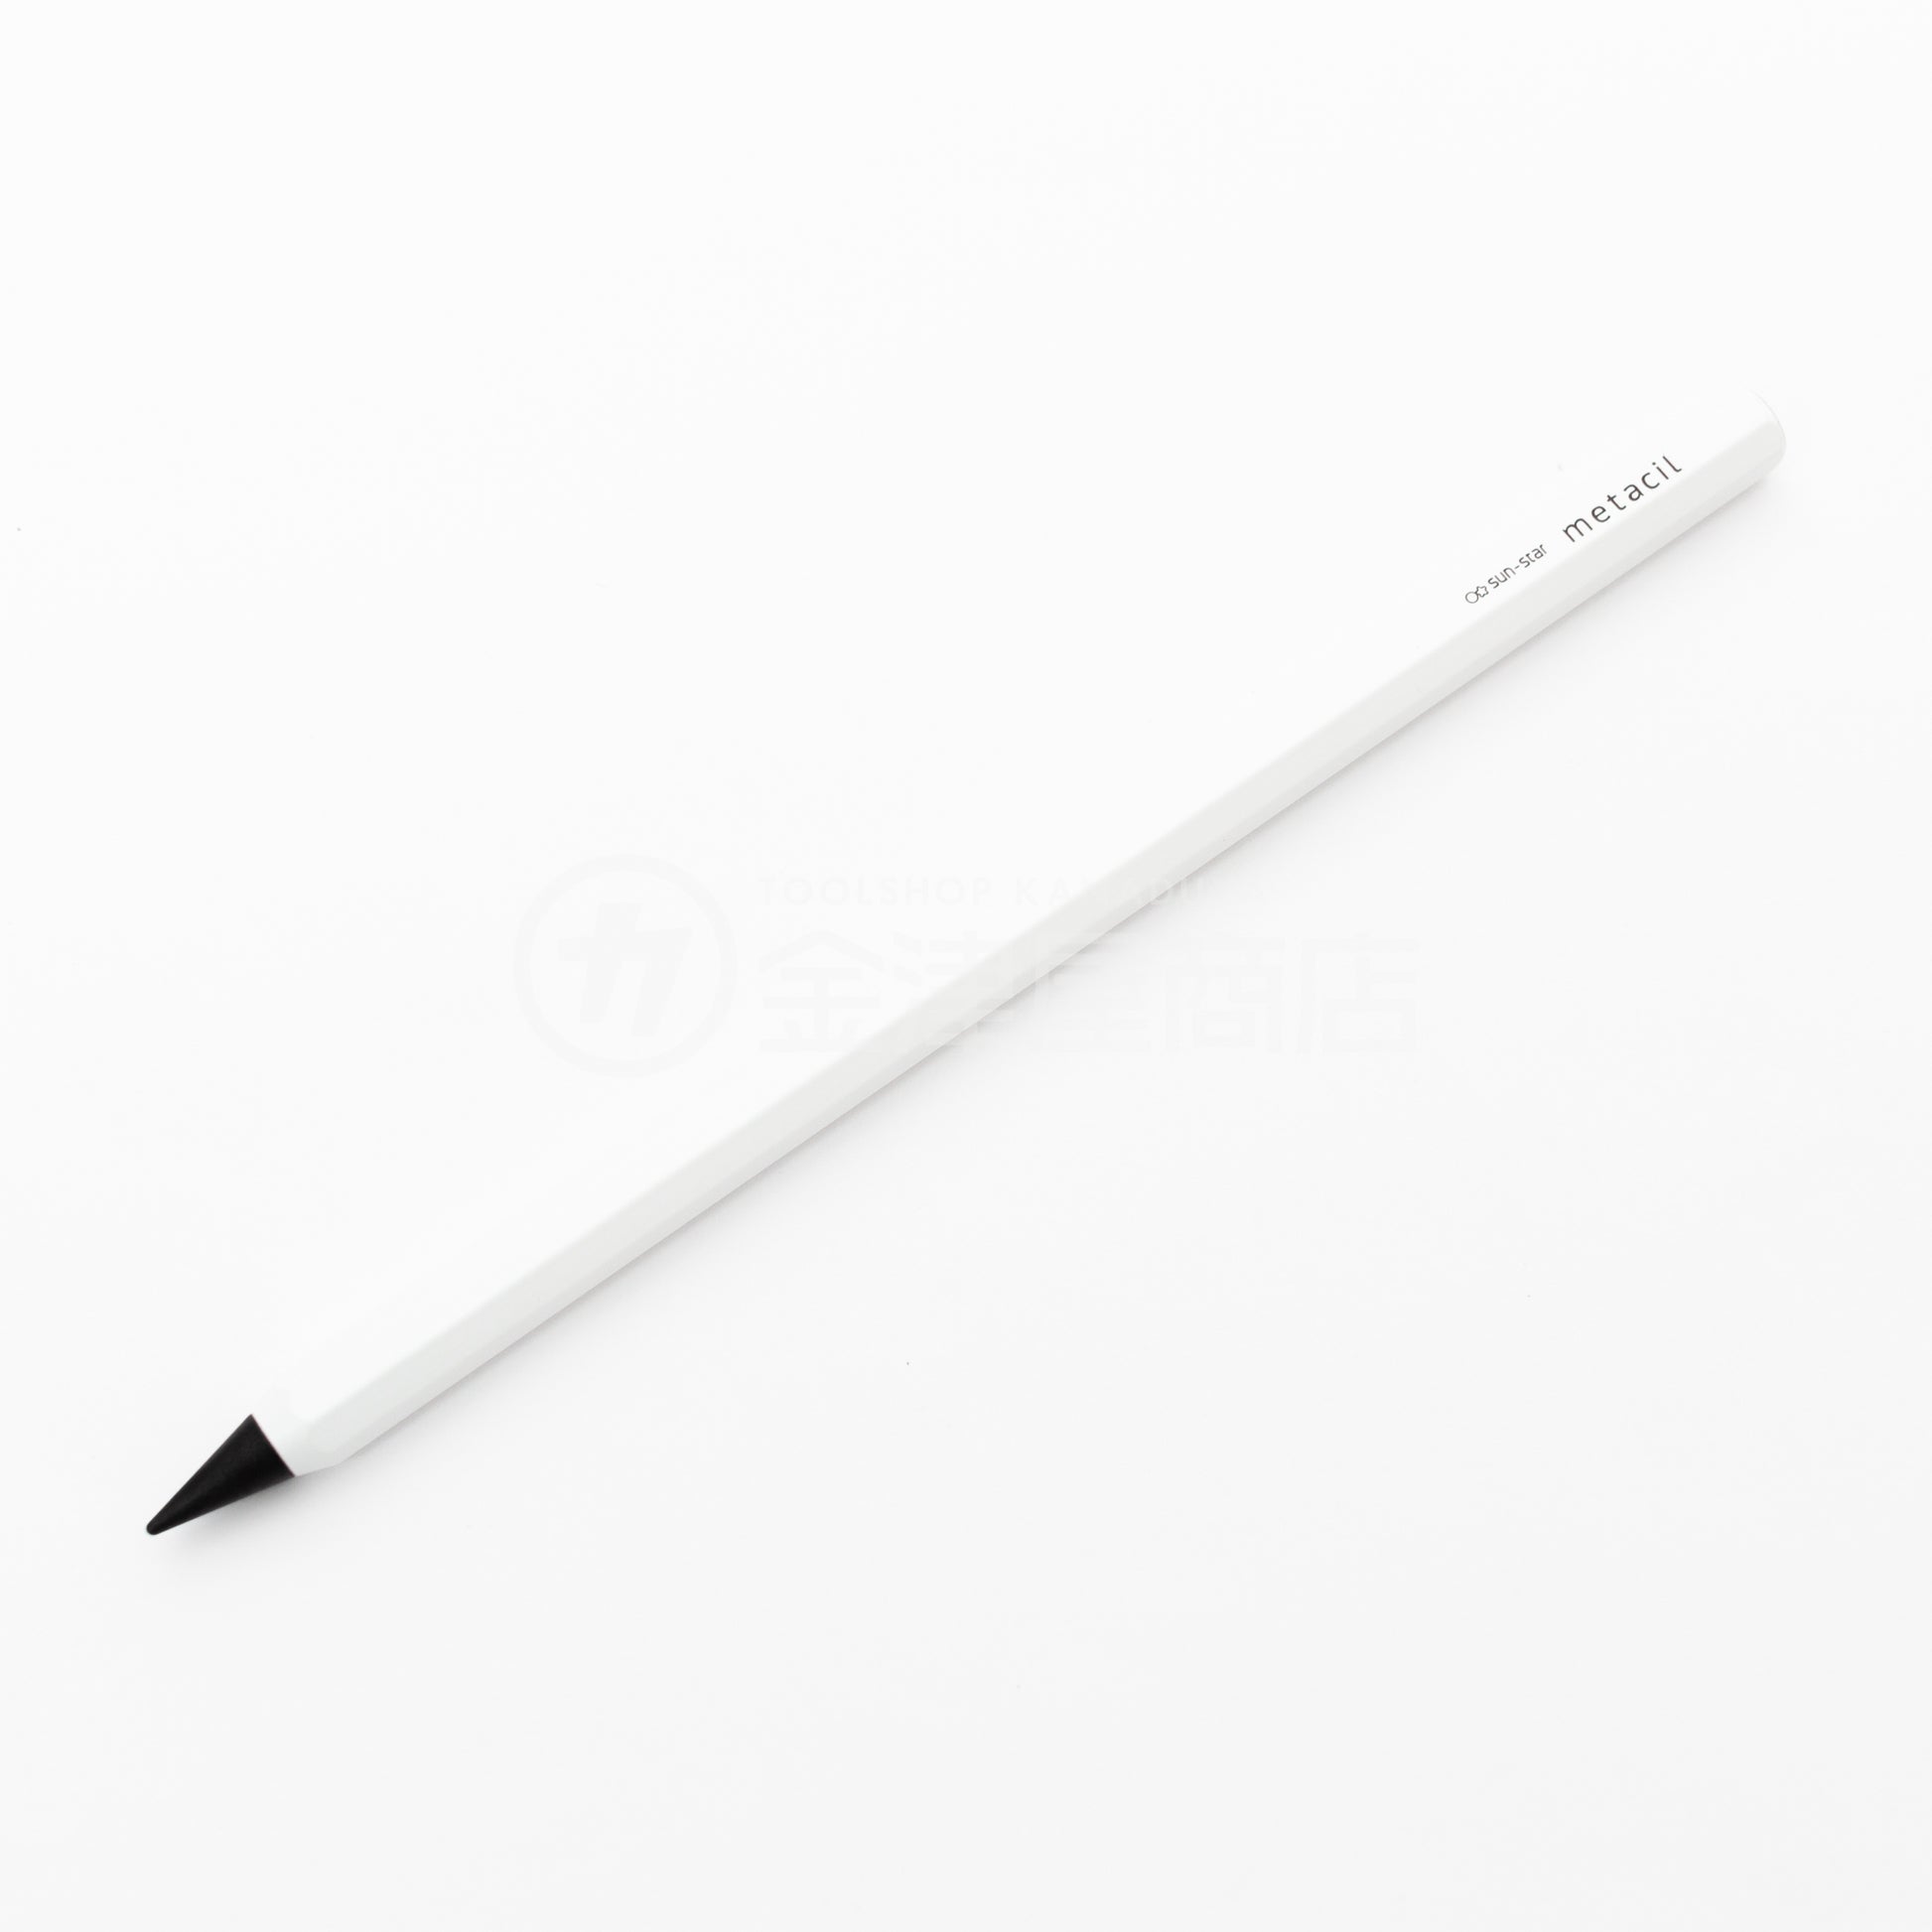 Sunstar Stationery Metal Pencil metacil metacil white S4541138